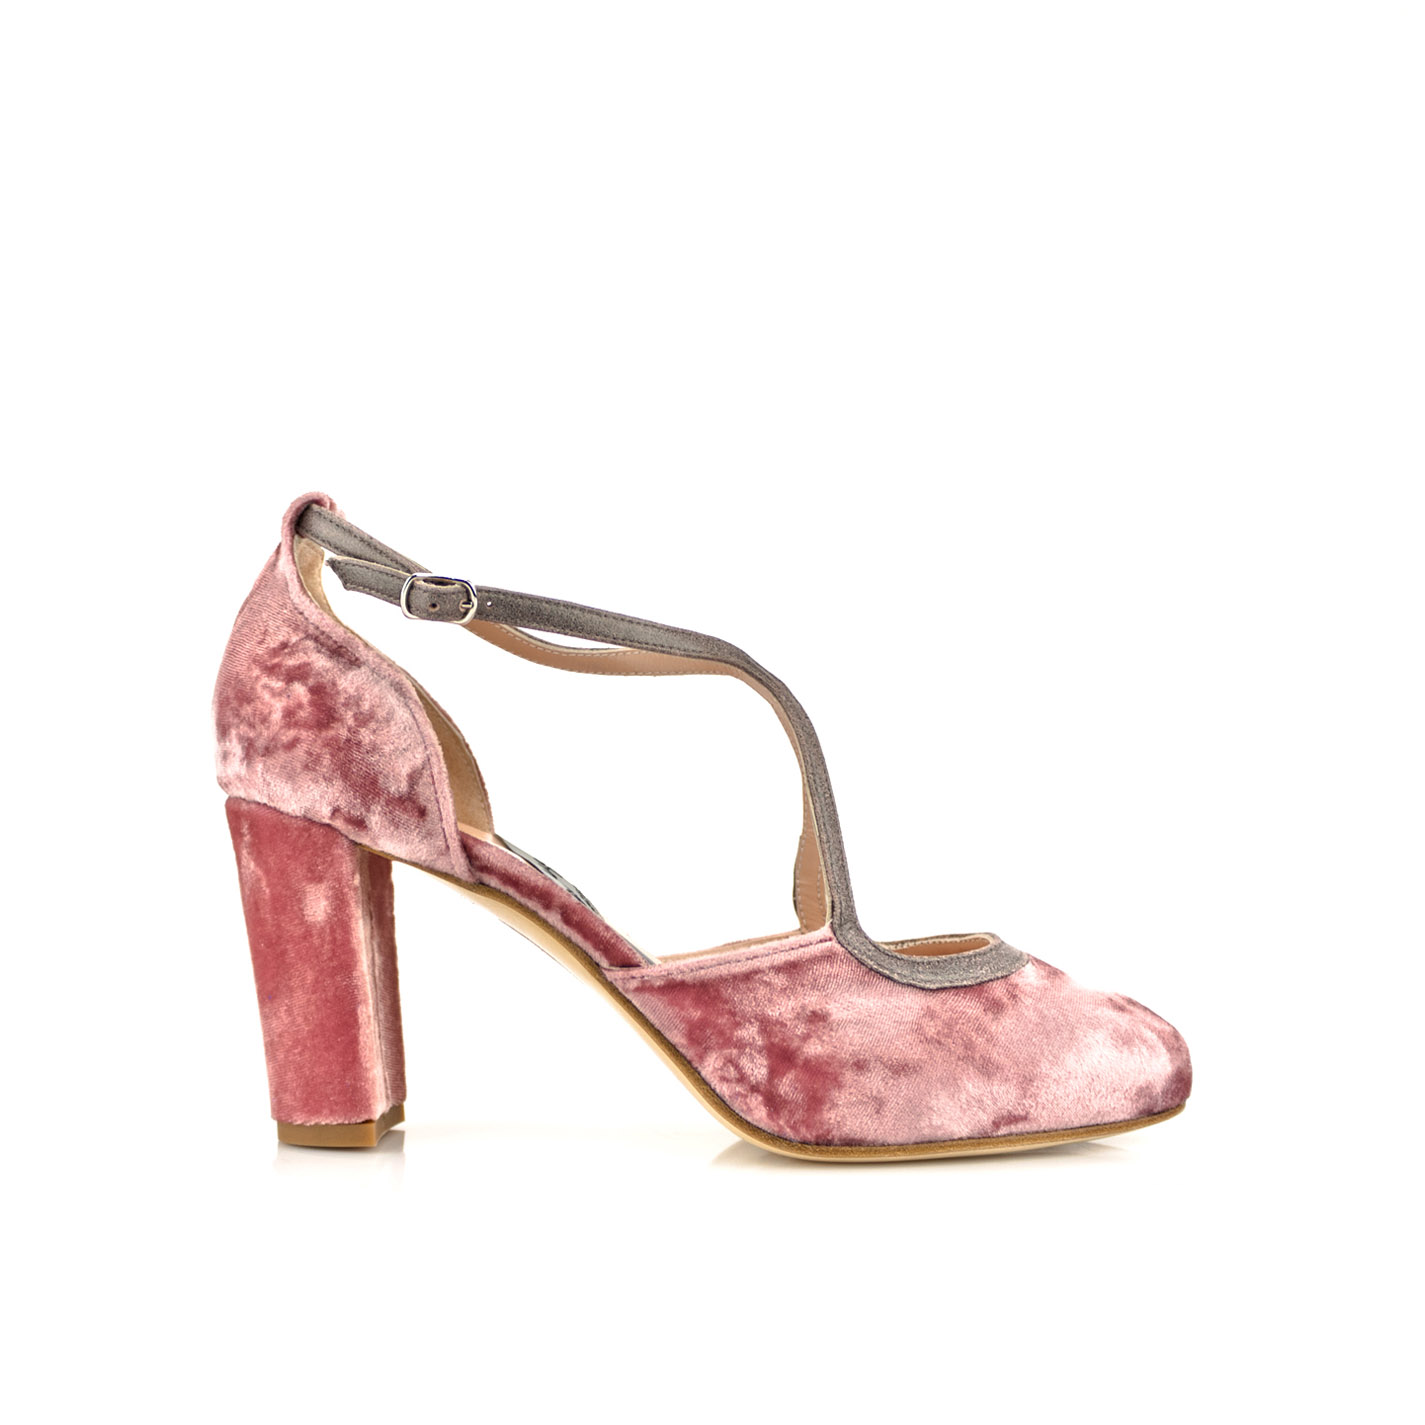 zapatos en rosado con tacon ancho 8 cm